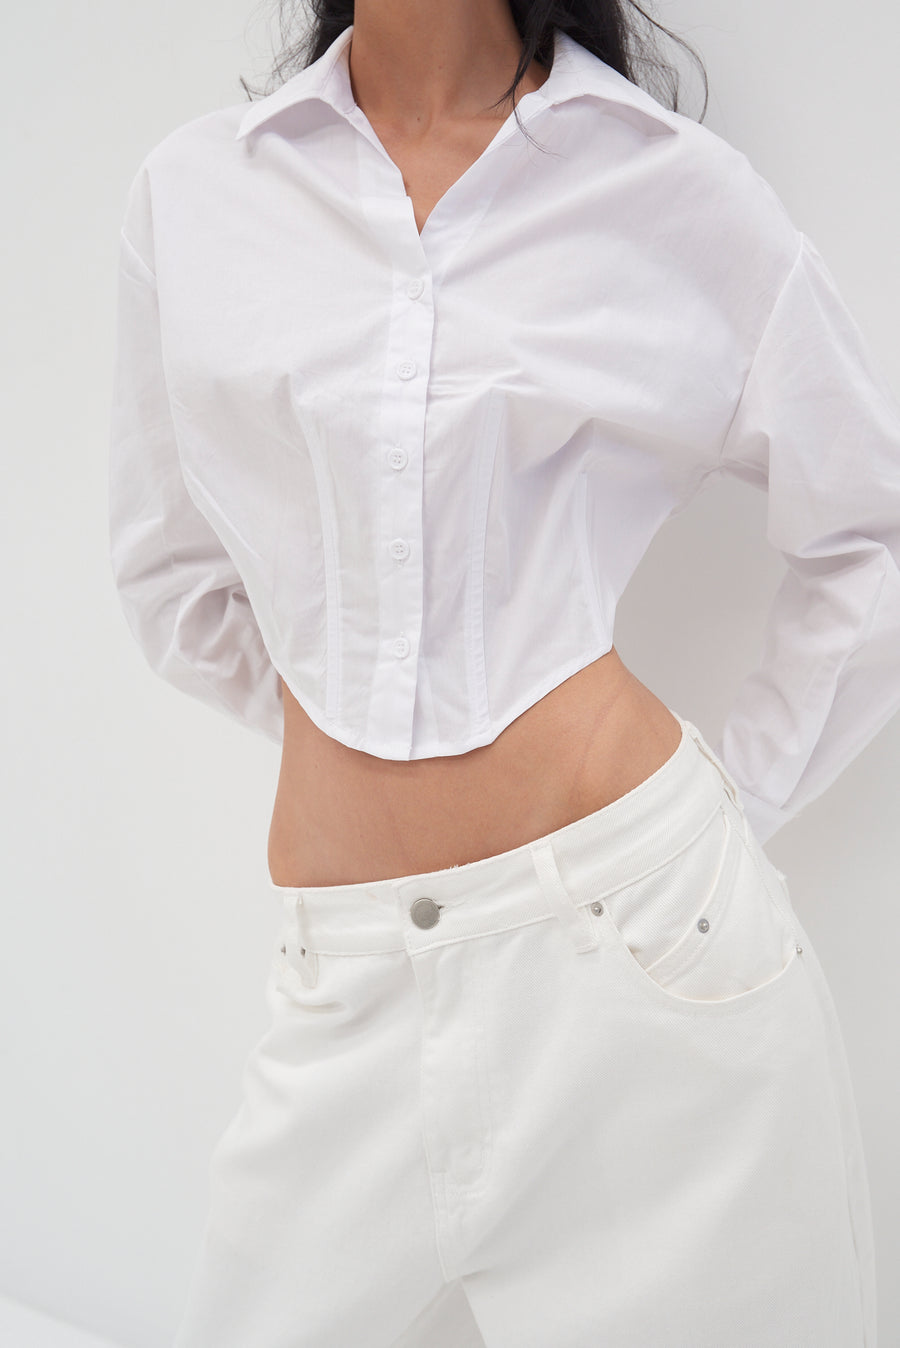 Petra Shirt Top - White